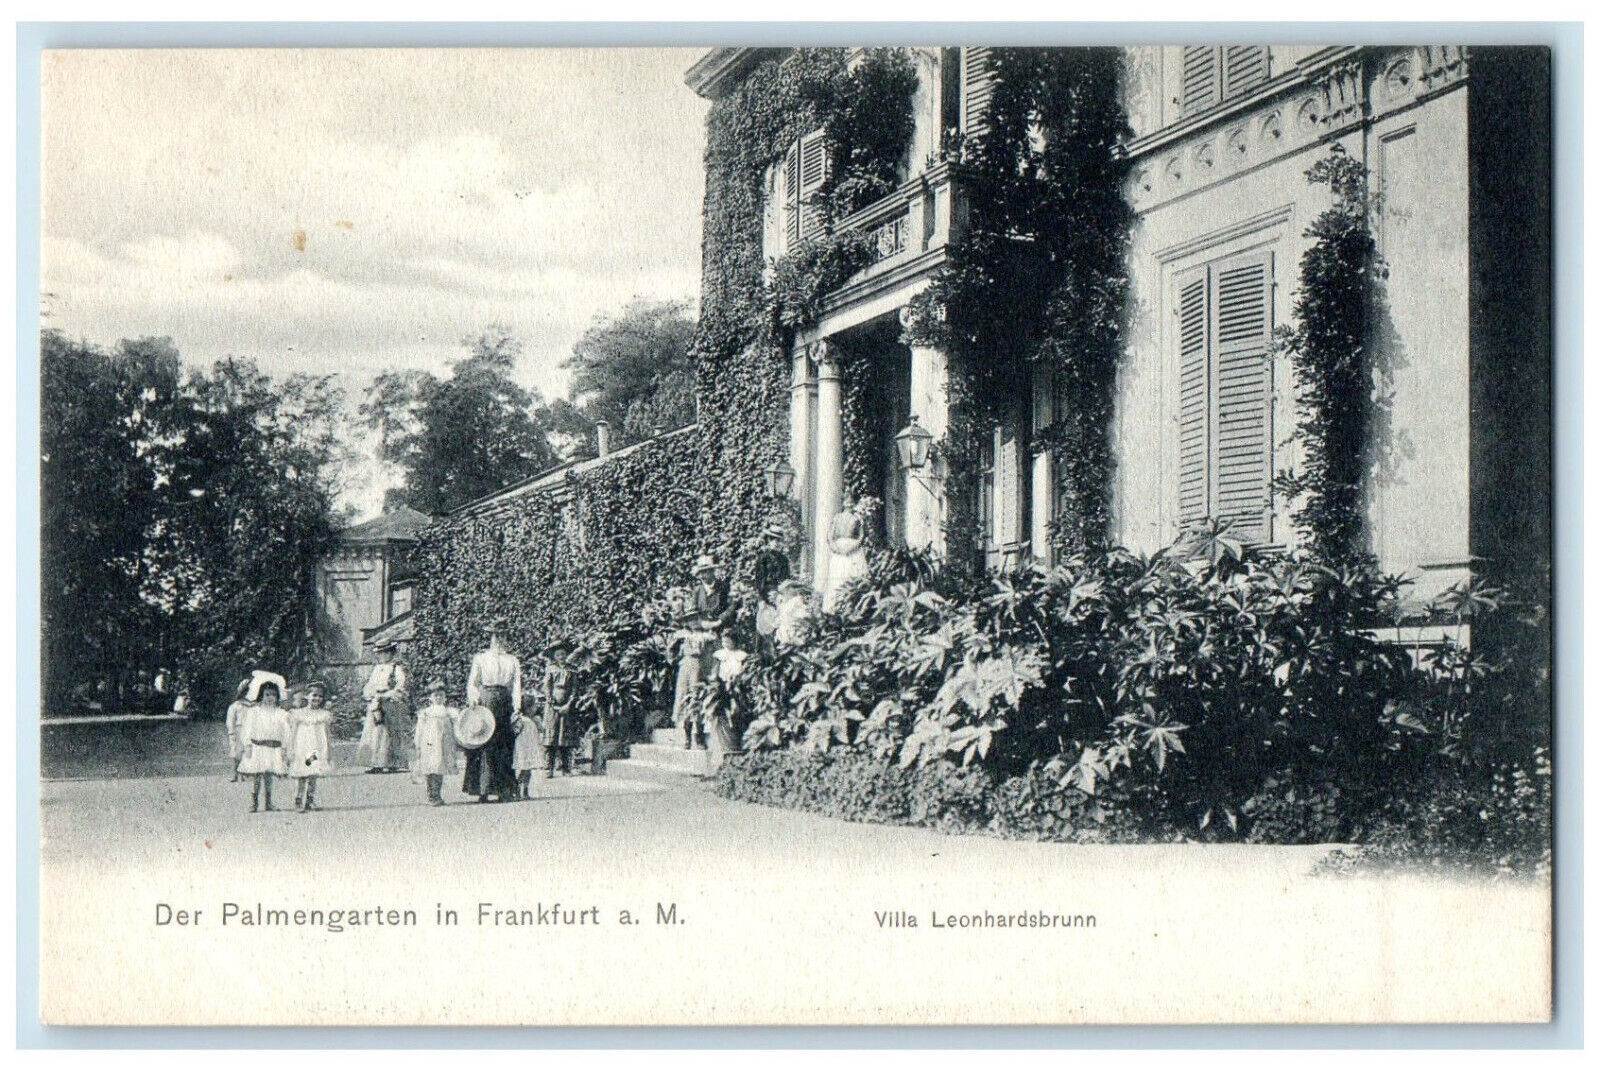 c1905 Villa Leonhardsbrunn Der Palmengarten in Frankfurt a.M. Germany Postcard